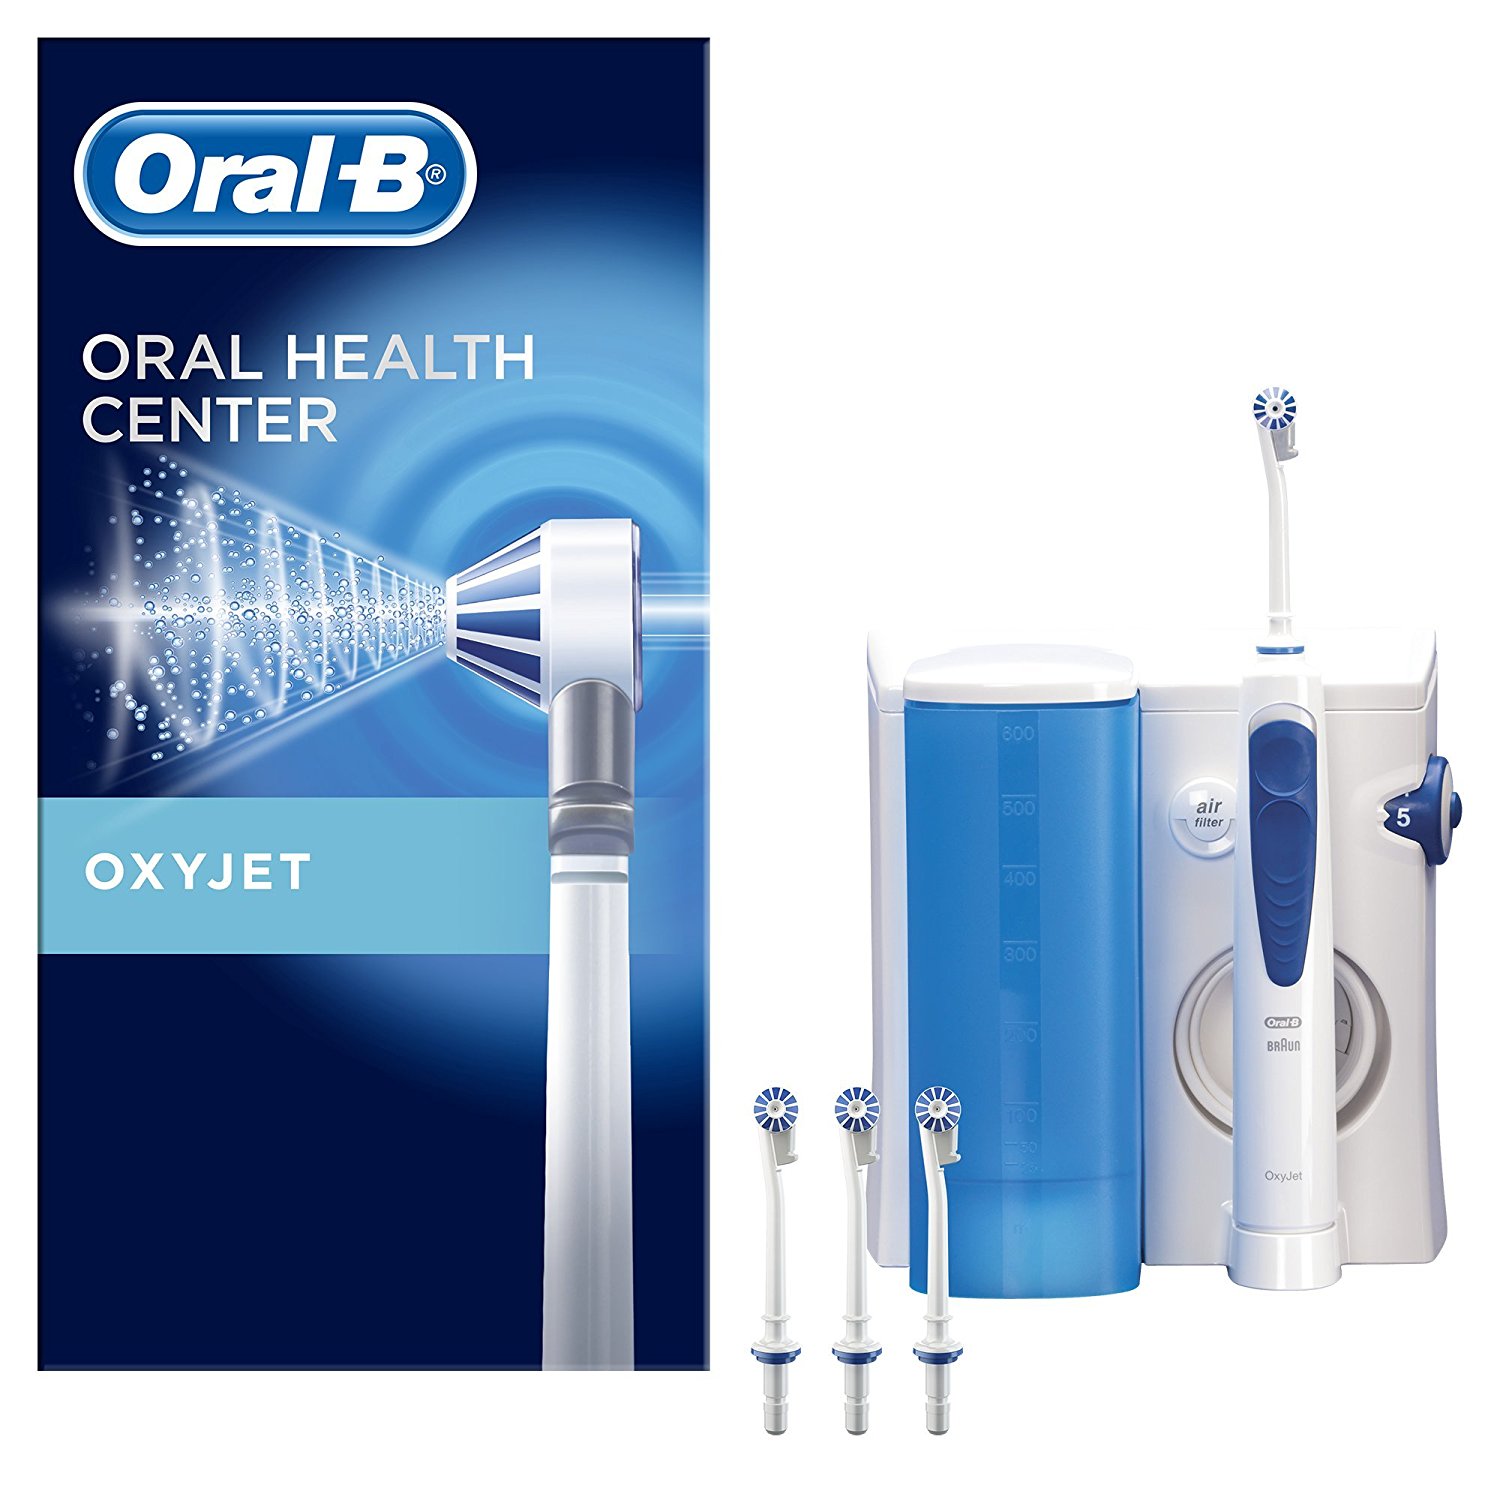 Irrigador dental Oral B Oxyjet solo 42,8€